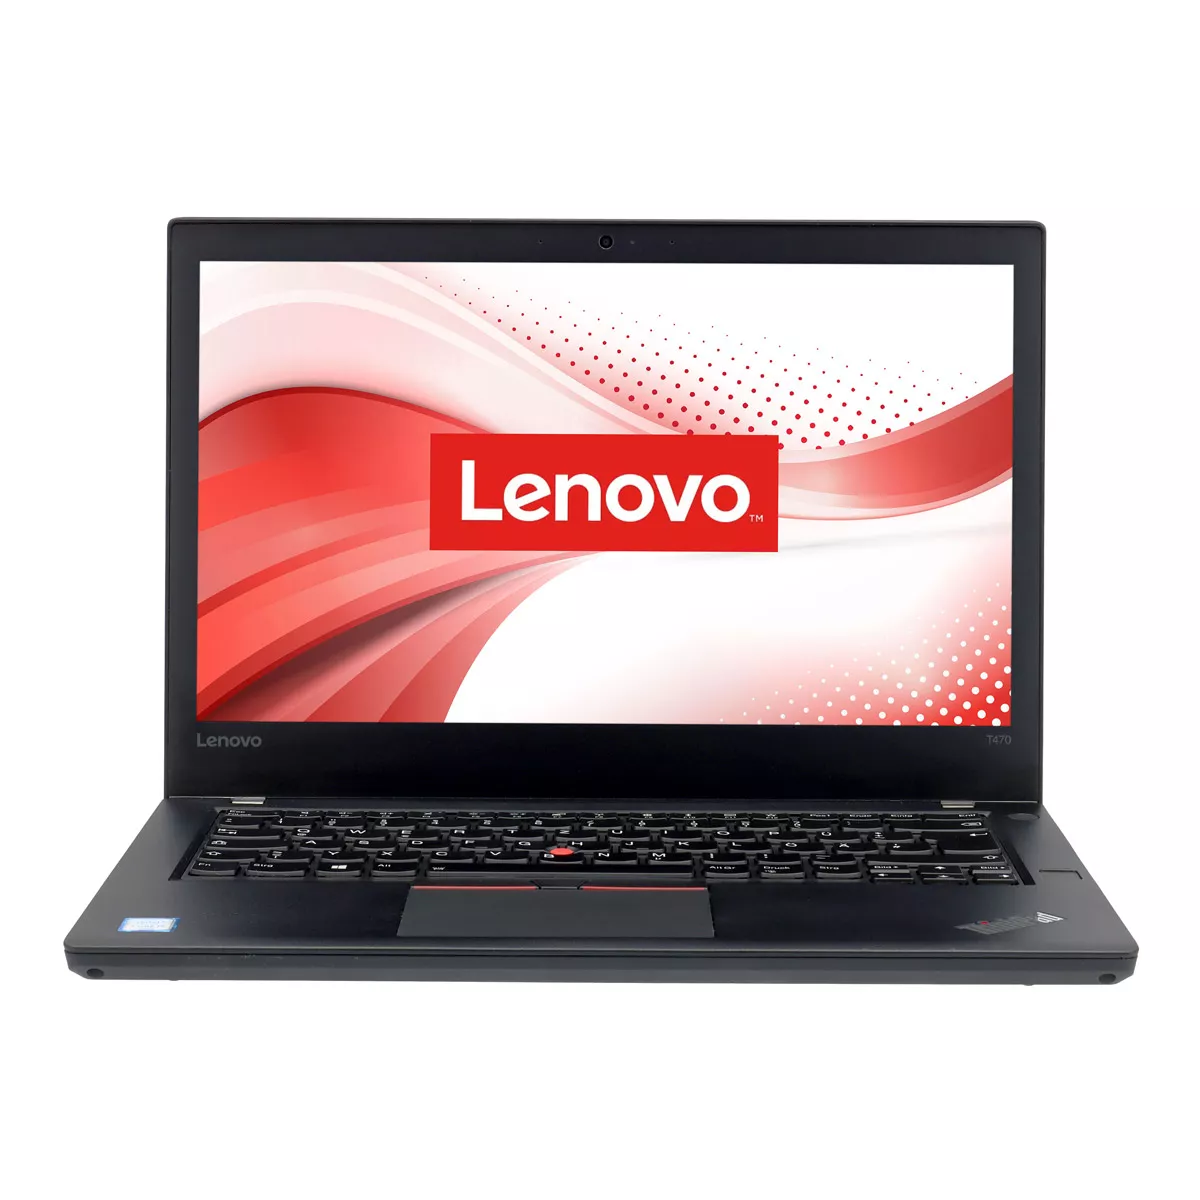 Lenovo ThinkPad T470 Core i5 6300U 2,40 GHz 256 GB M.2 SSD Touchscreen Webcam B